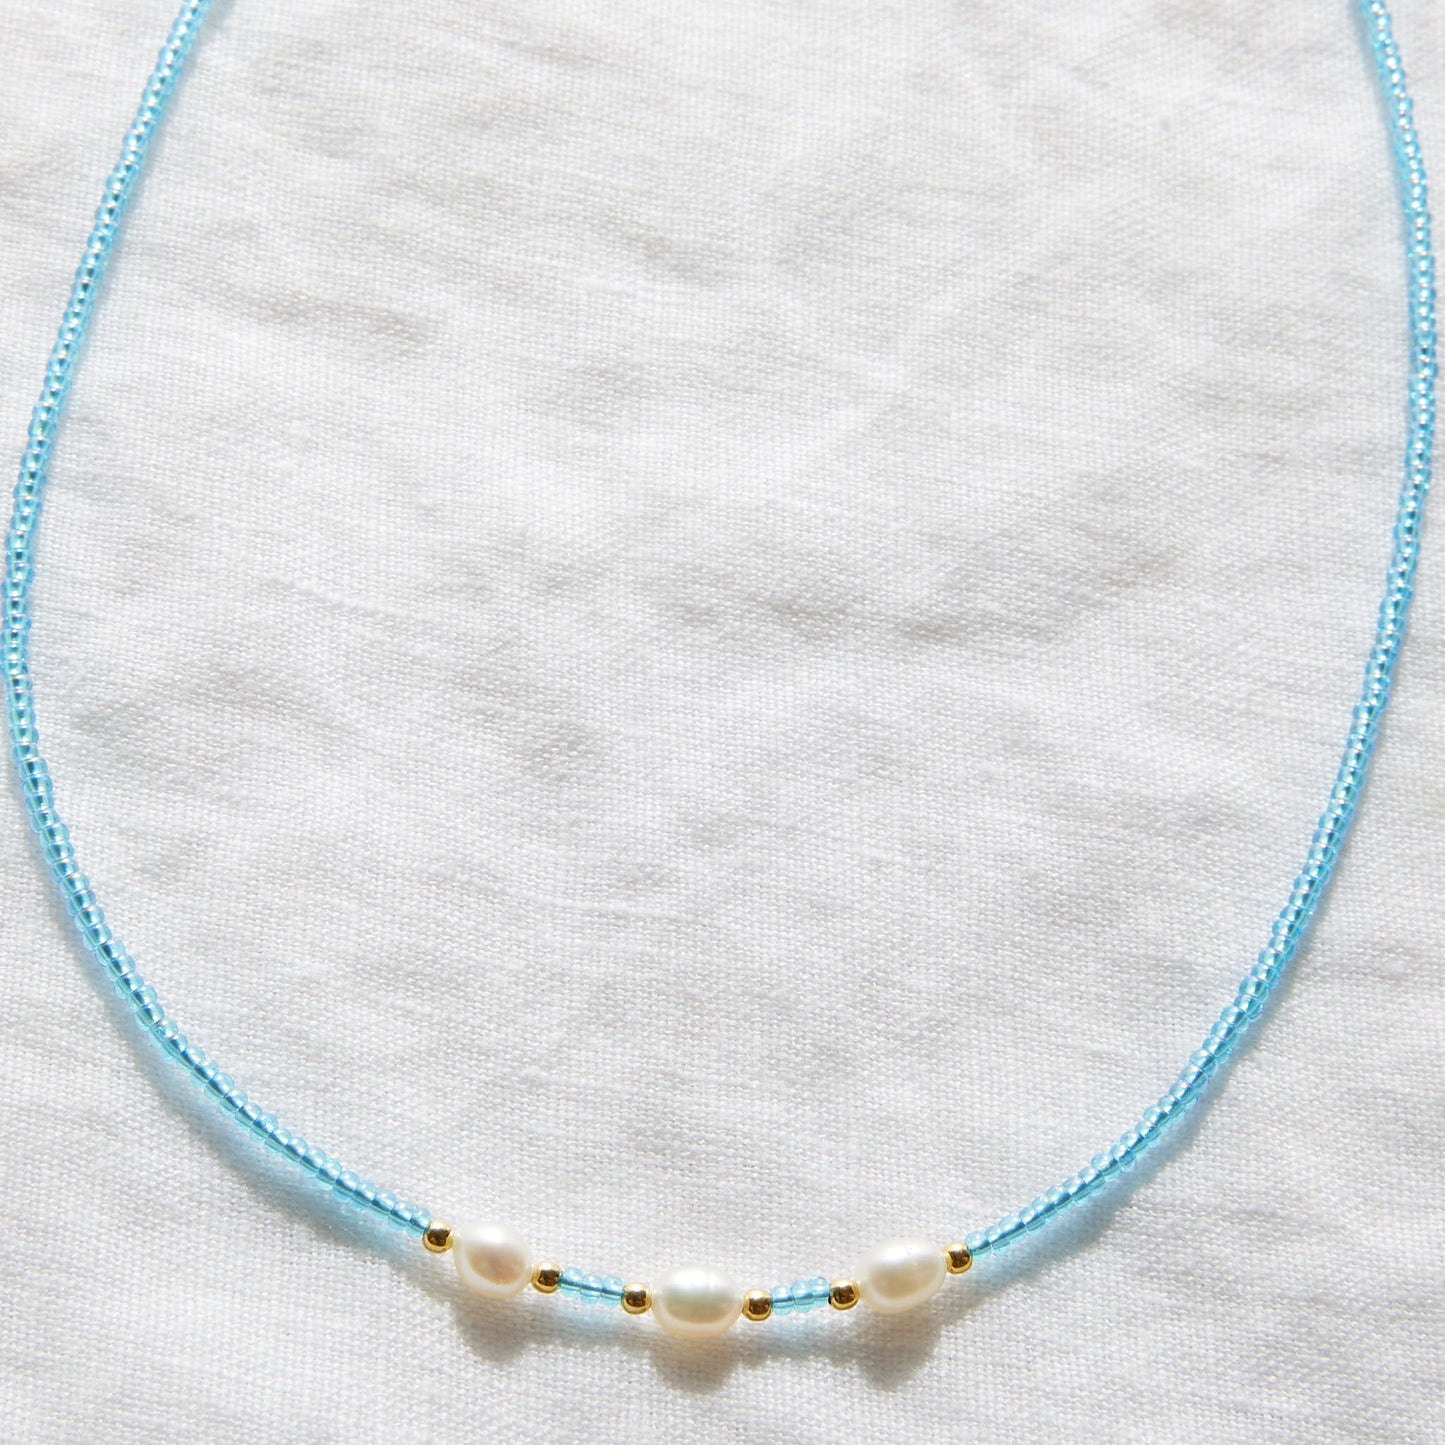 Collier de perles arc-en-ciel bleu ciel avec perles de culture d'eau douce